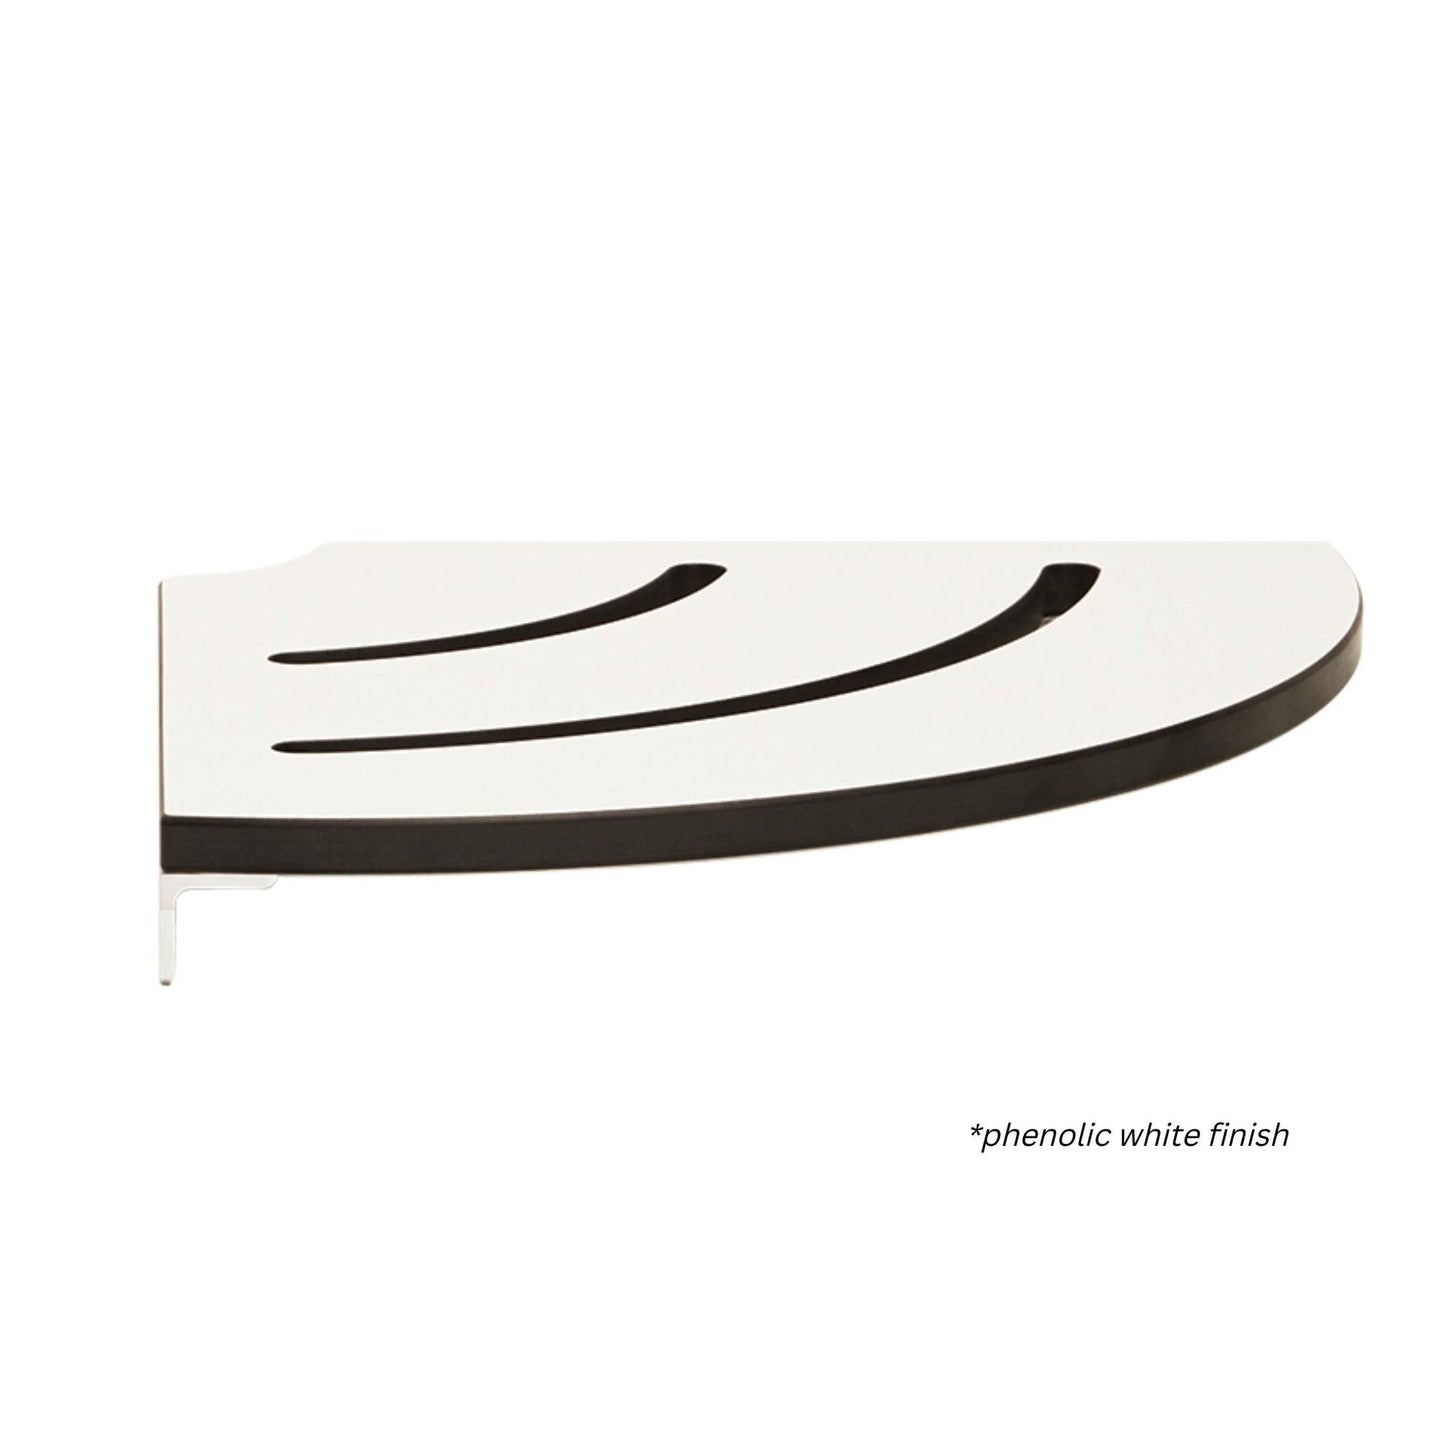 Seachrome Lifestyle and Wellness 12" x 9" Contour Shower Shelf, One-Piece Solid Phenolic Black Stainless Finish